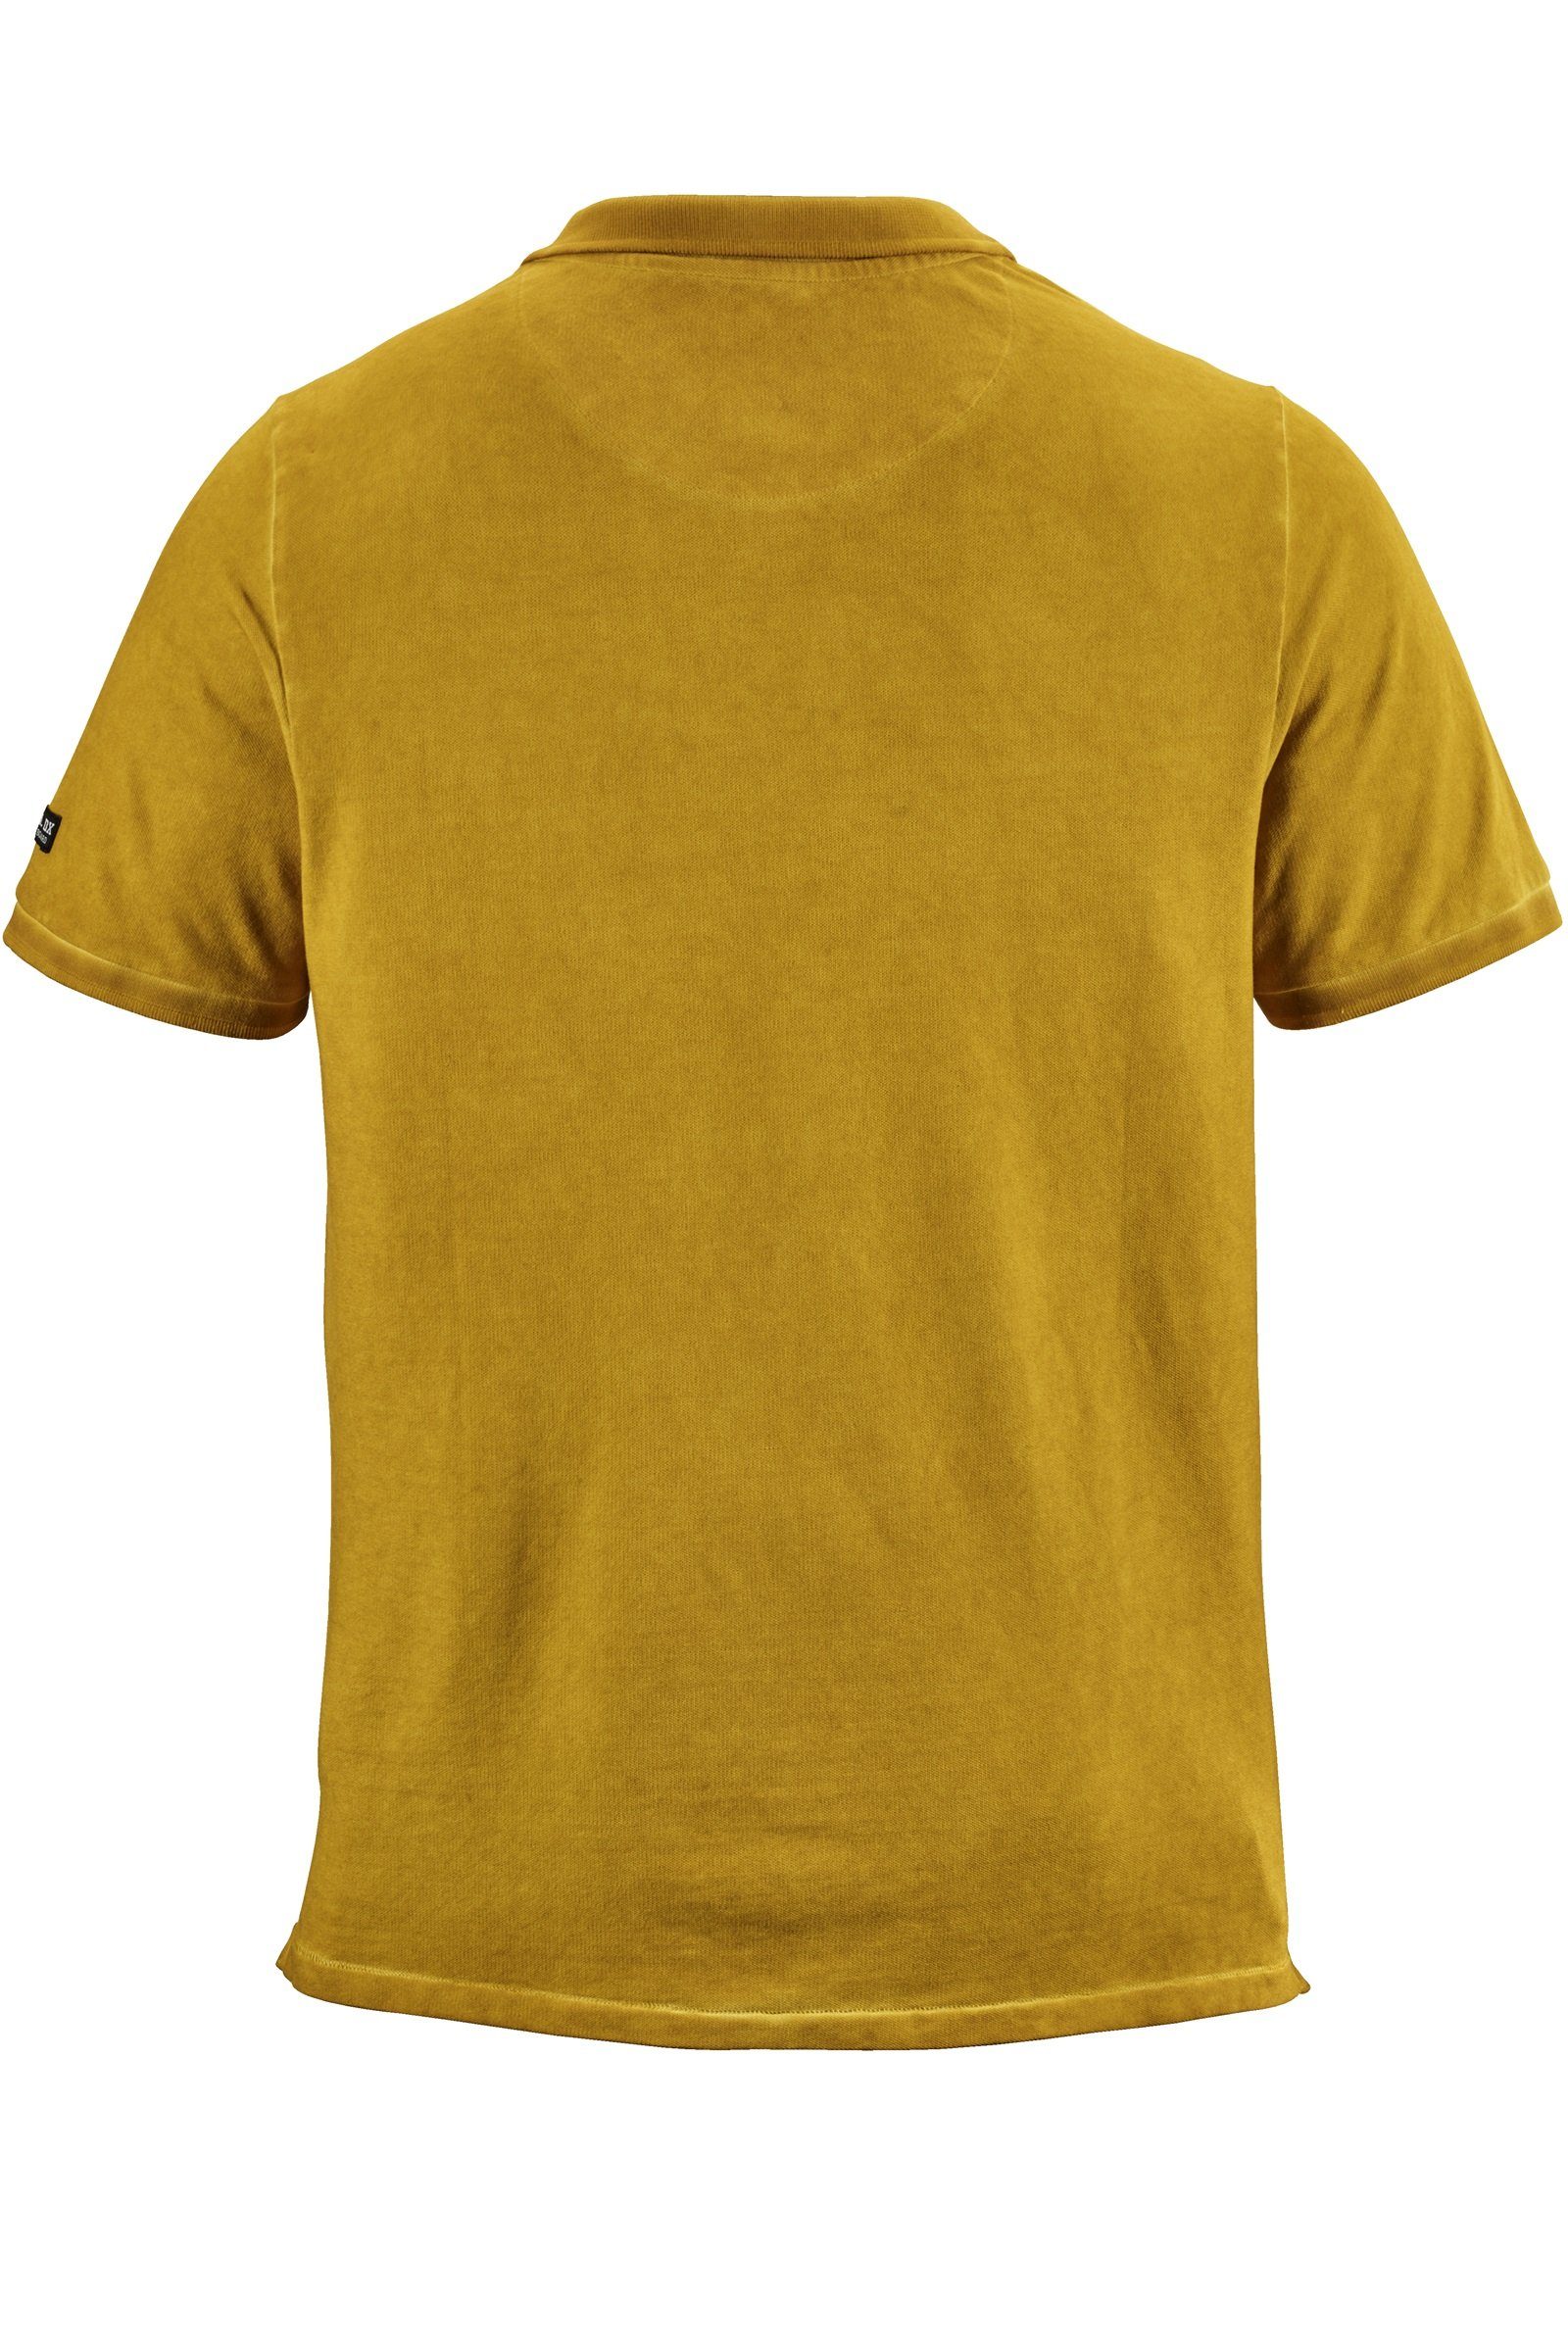 G.I.G.A. by Poloshirt Poloshirt gelb gebranntes Adult Stane G.I.G.A. DX DX A killtec Herren